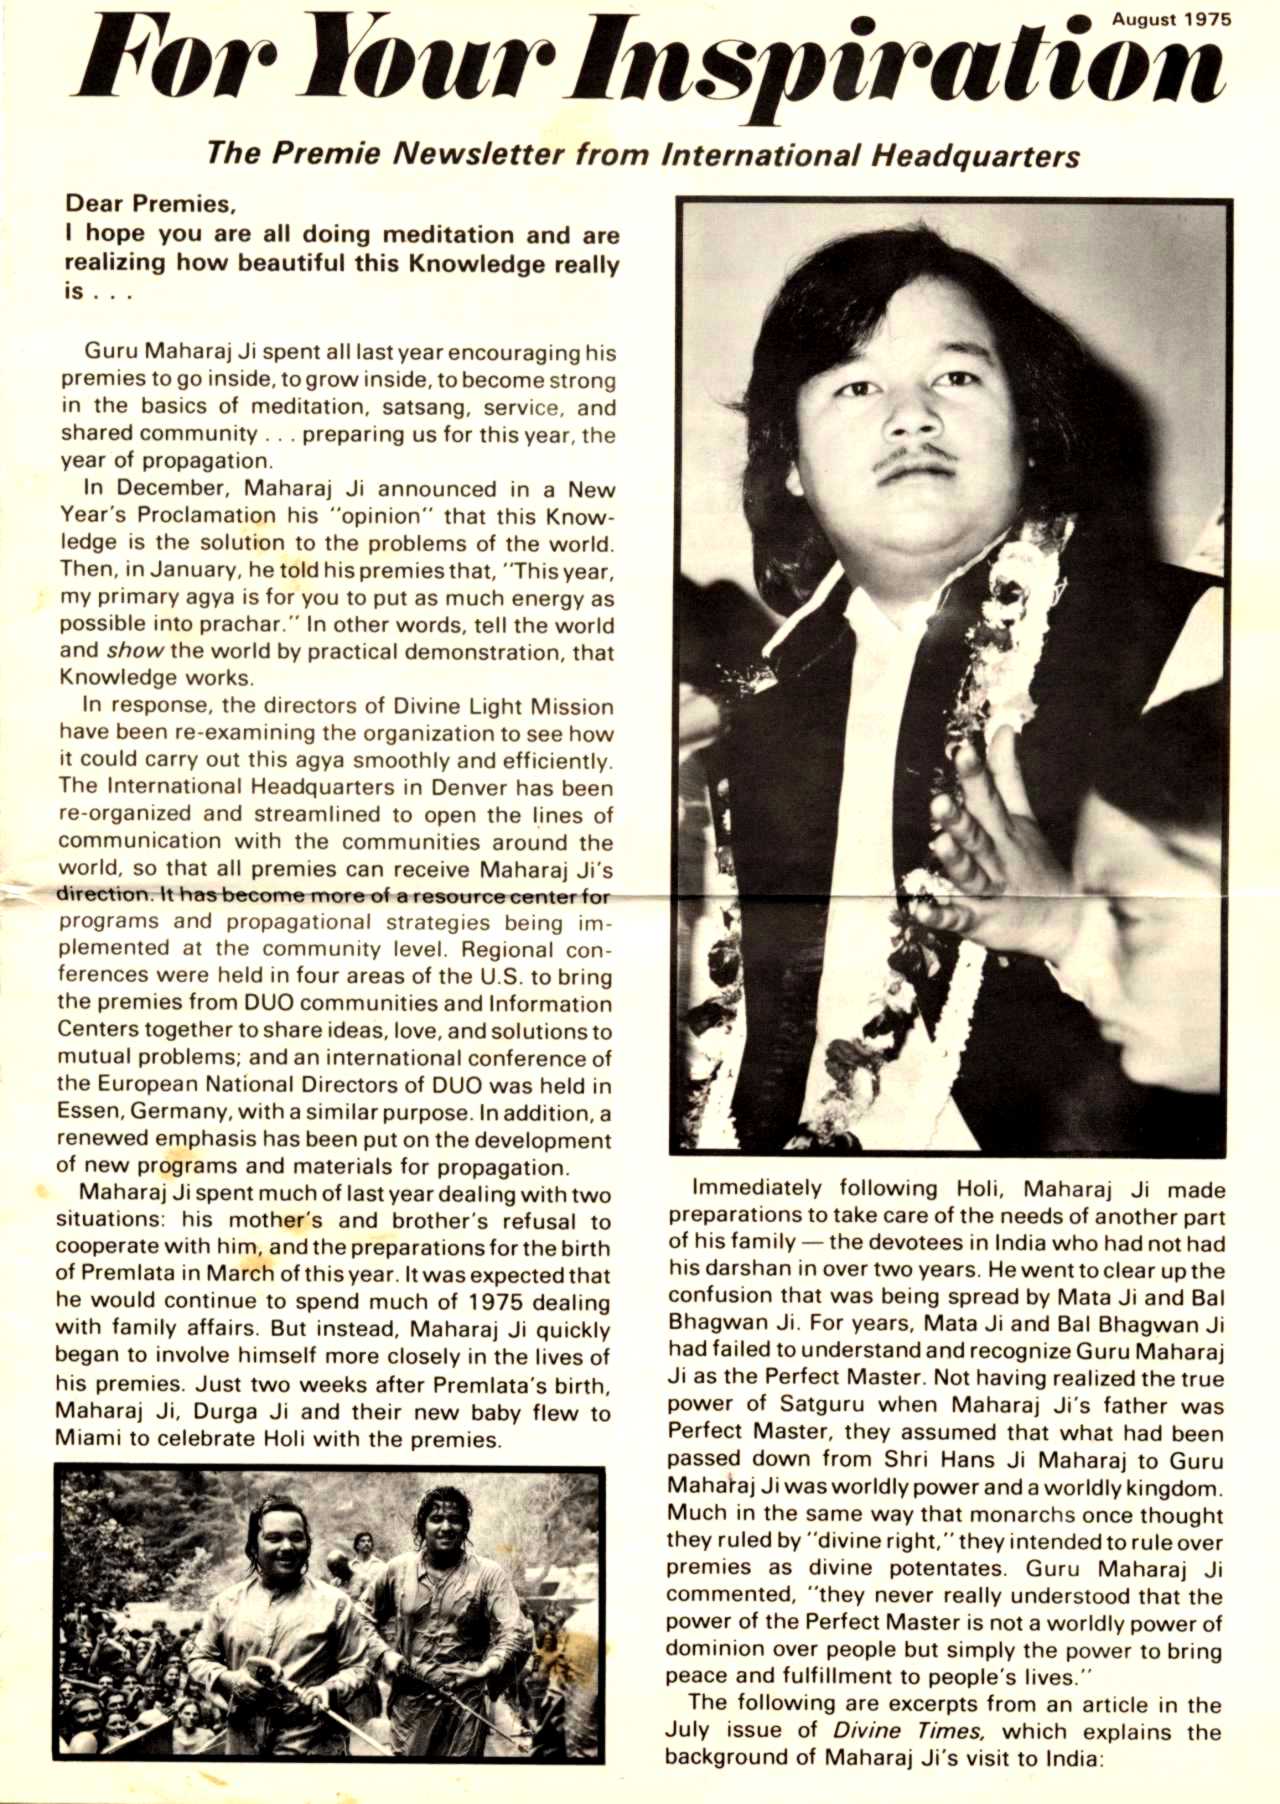 magazine_for_your_inspiration_august_1975.jpg 286.2K